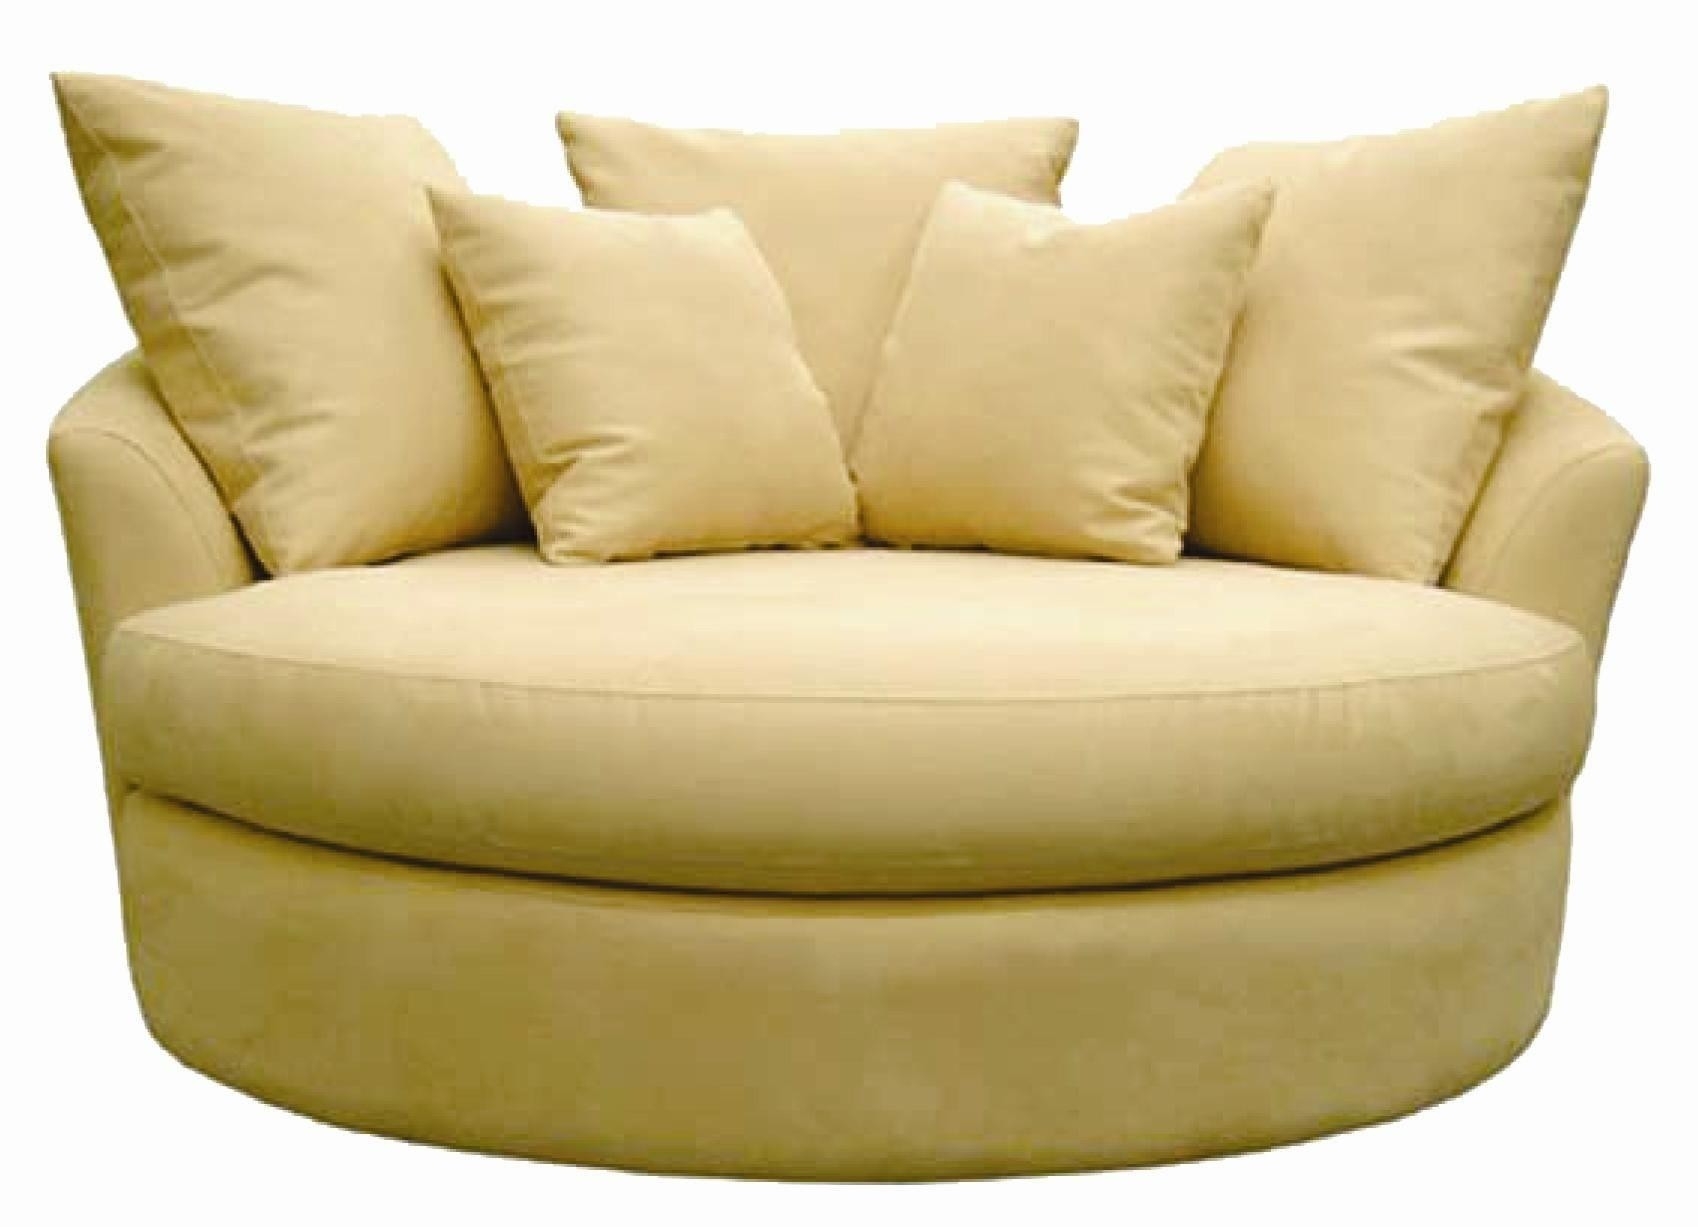 circular chair living room furniture